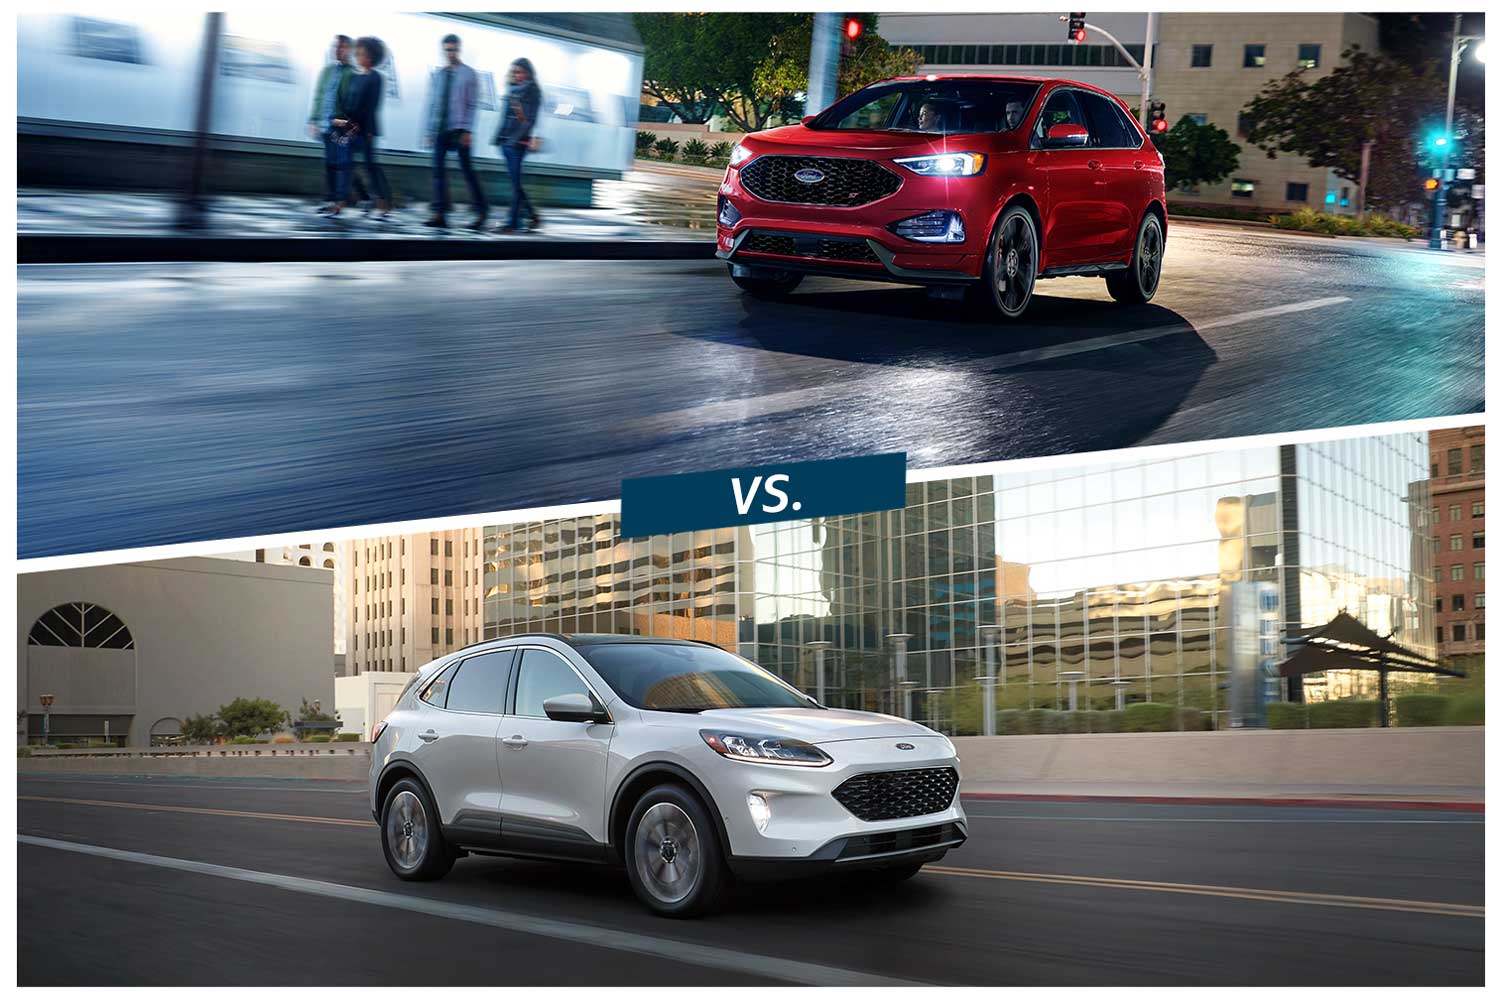 2022 Ford Edge in red vs. 2022 Ford Escape in white